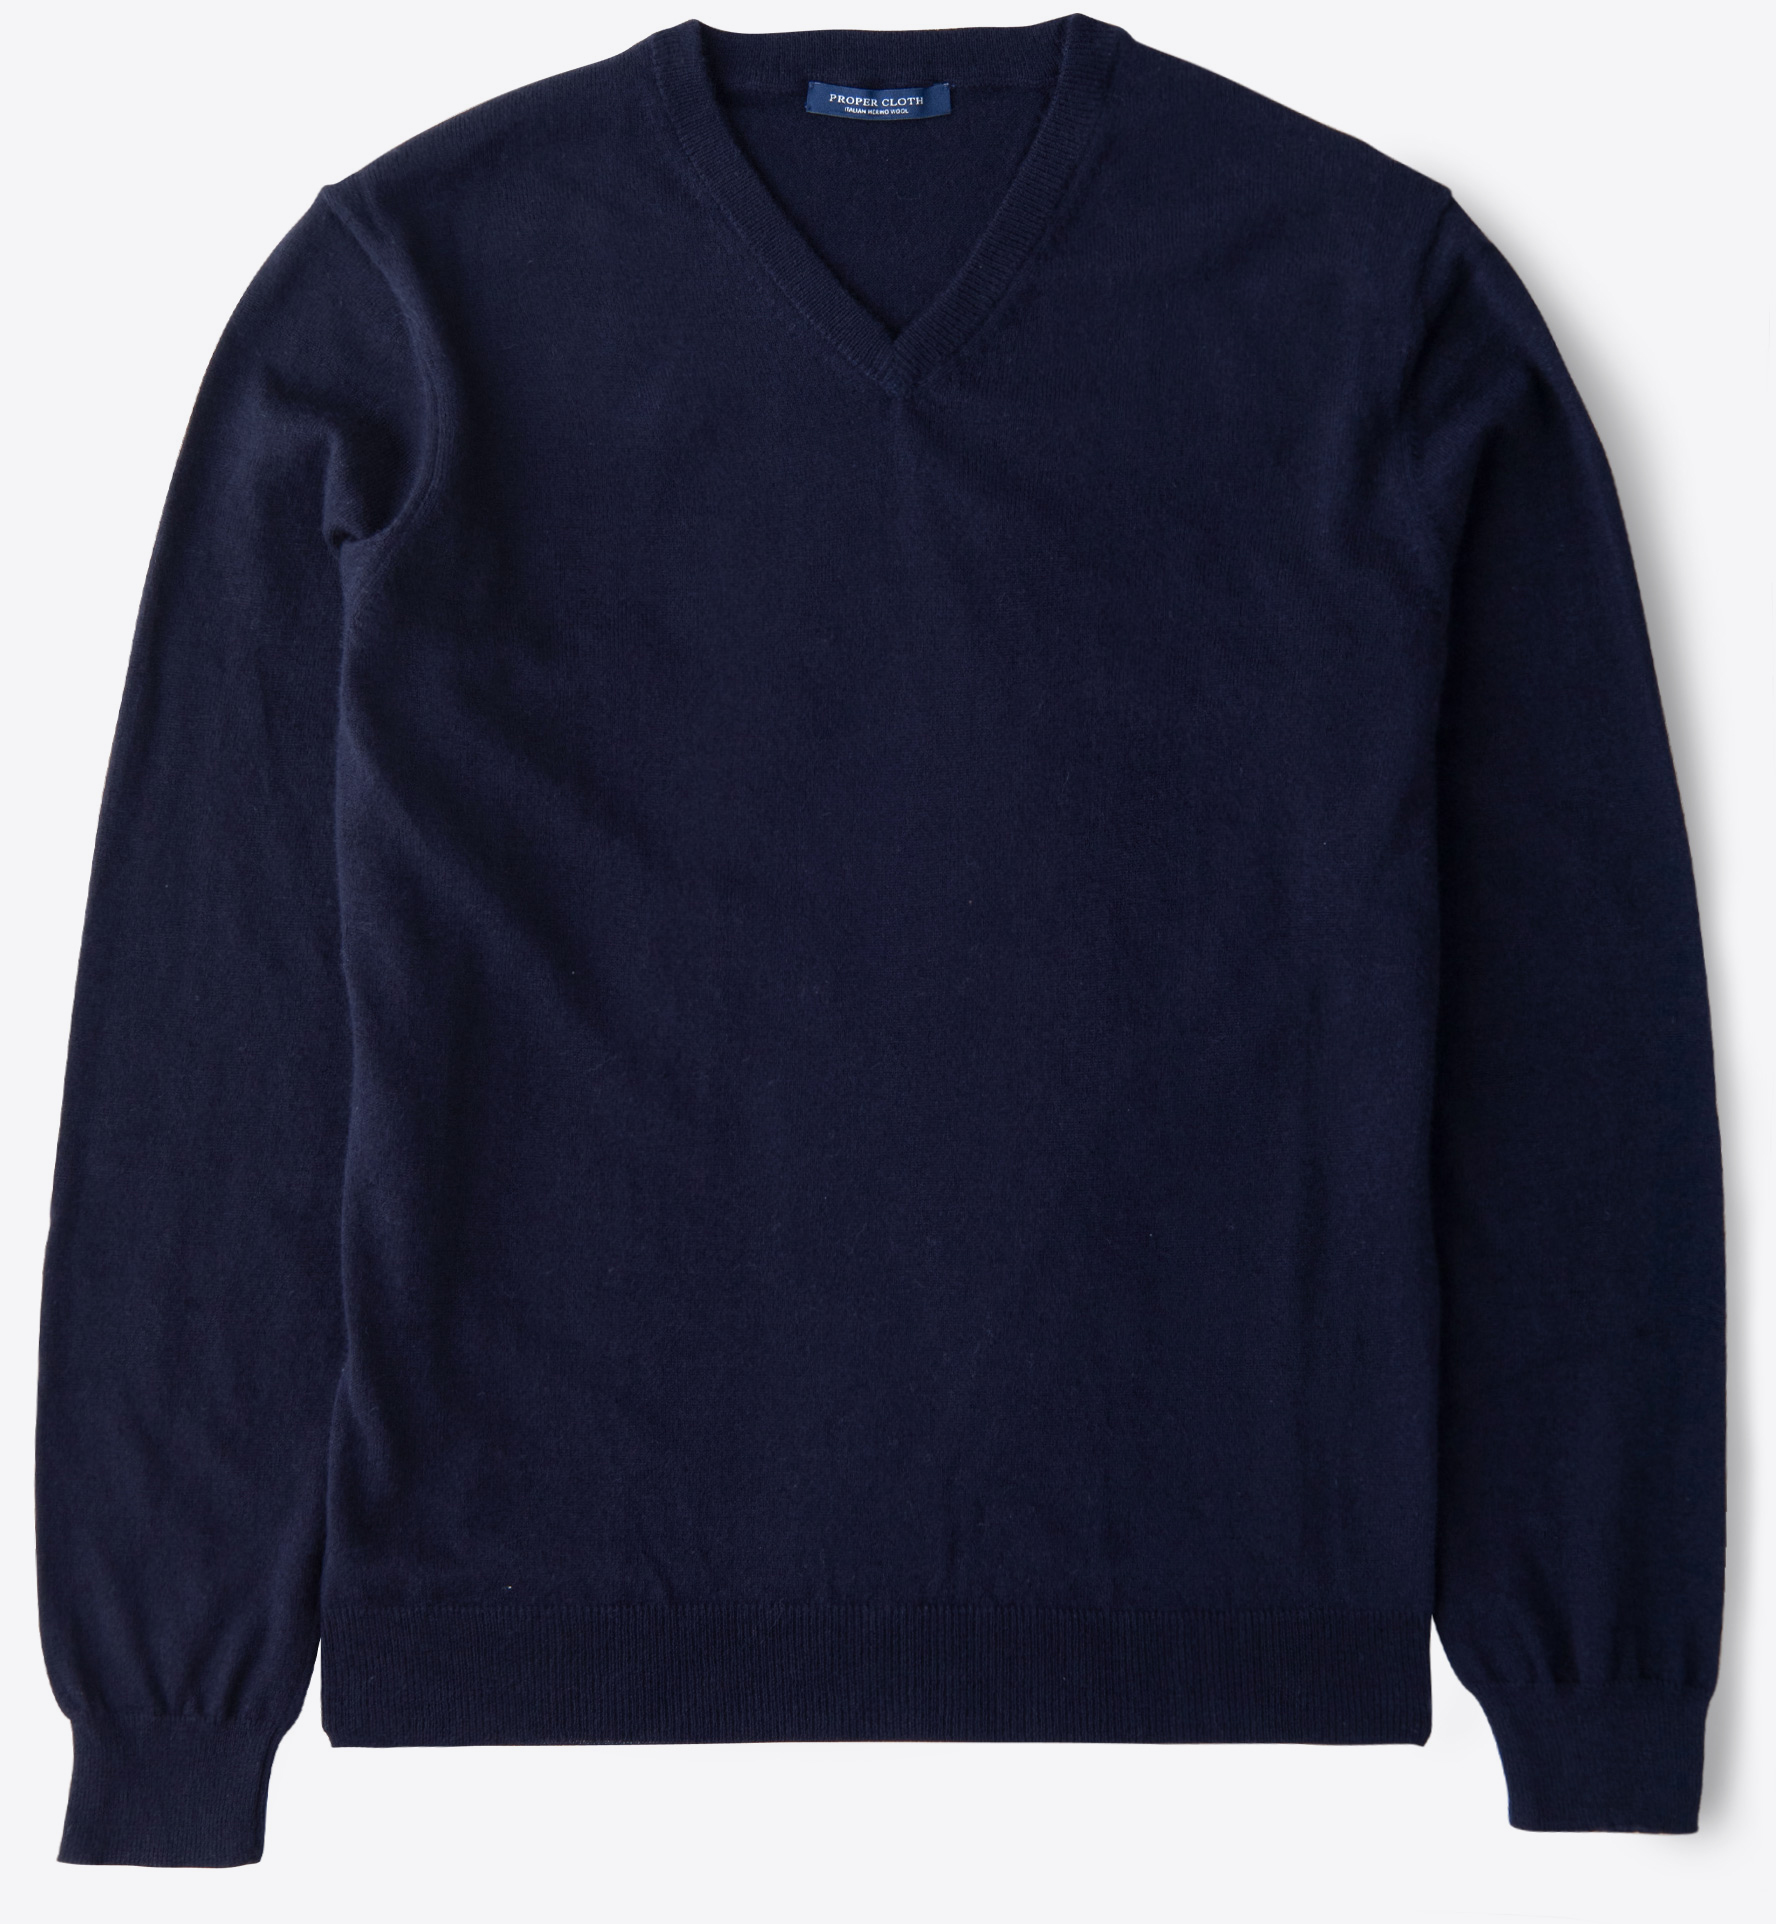 Zoom Image of Navy Merino V-Neck Sweater